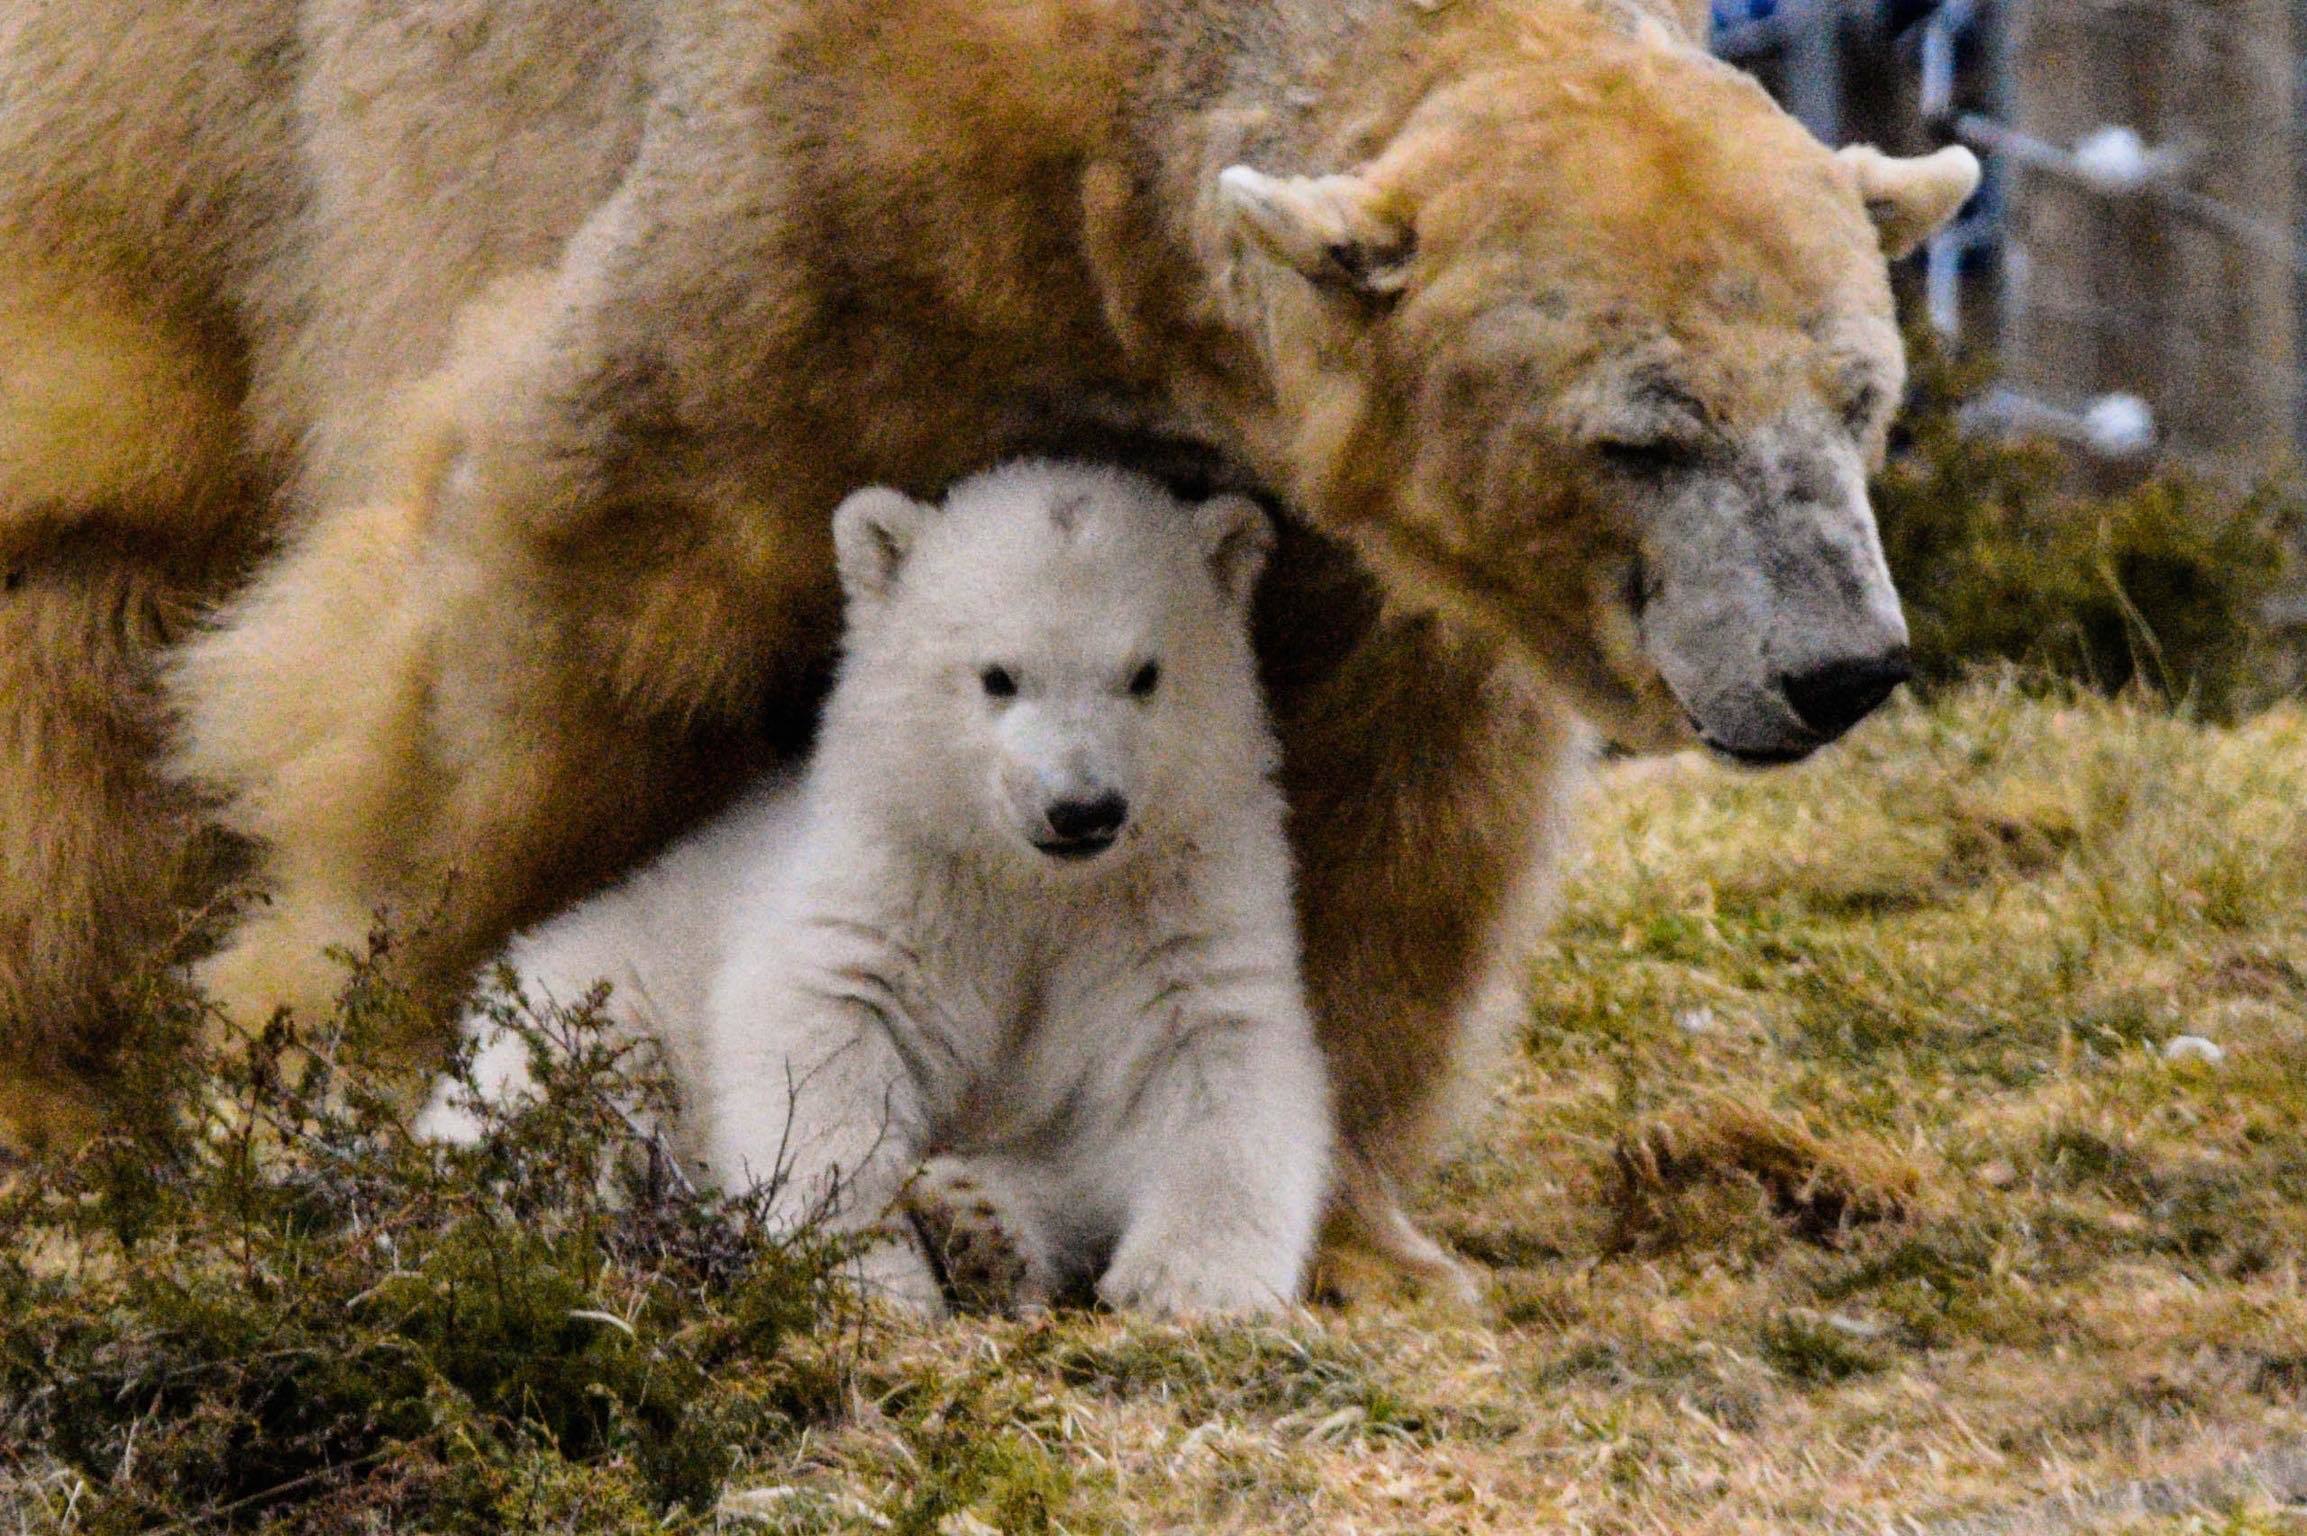 A mother's love — photos capture Scotland's new polar bear cub